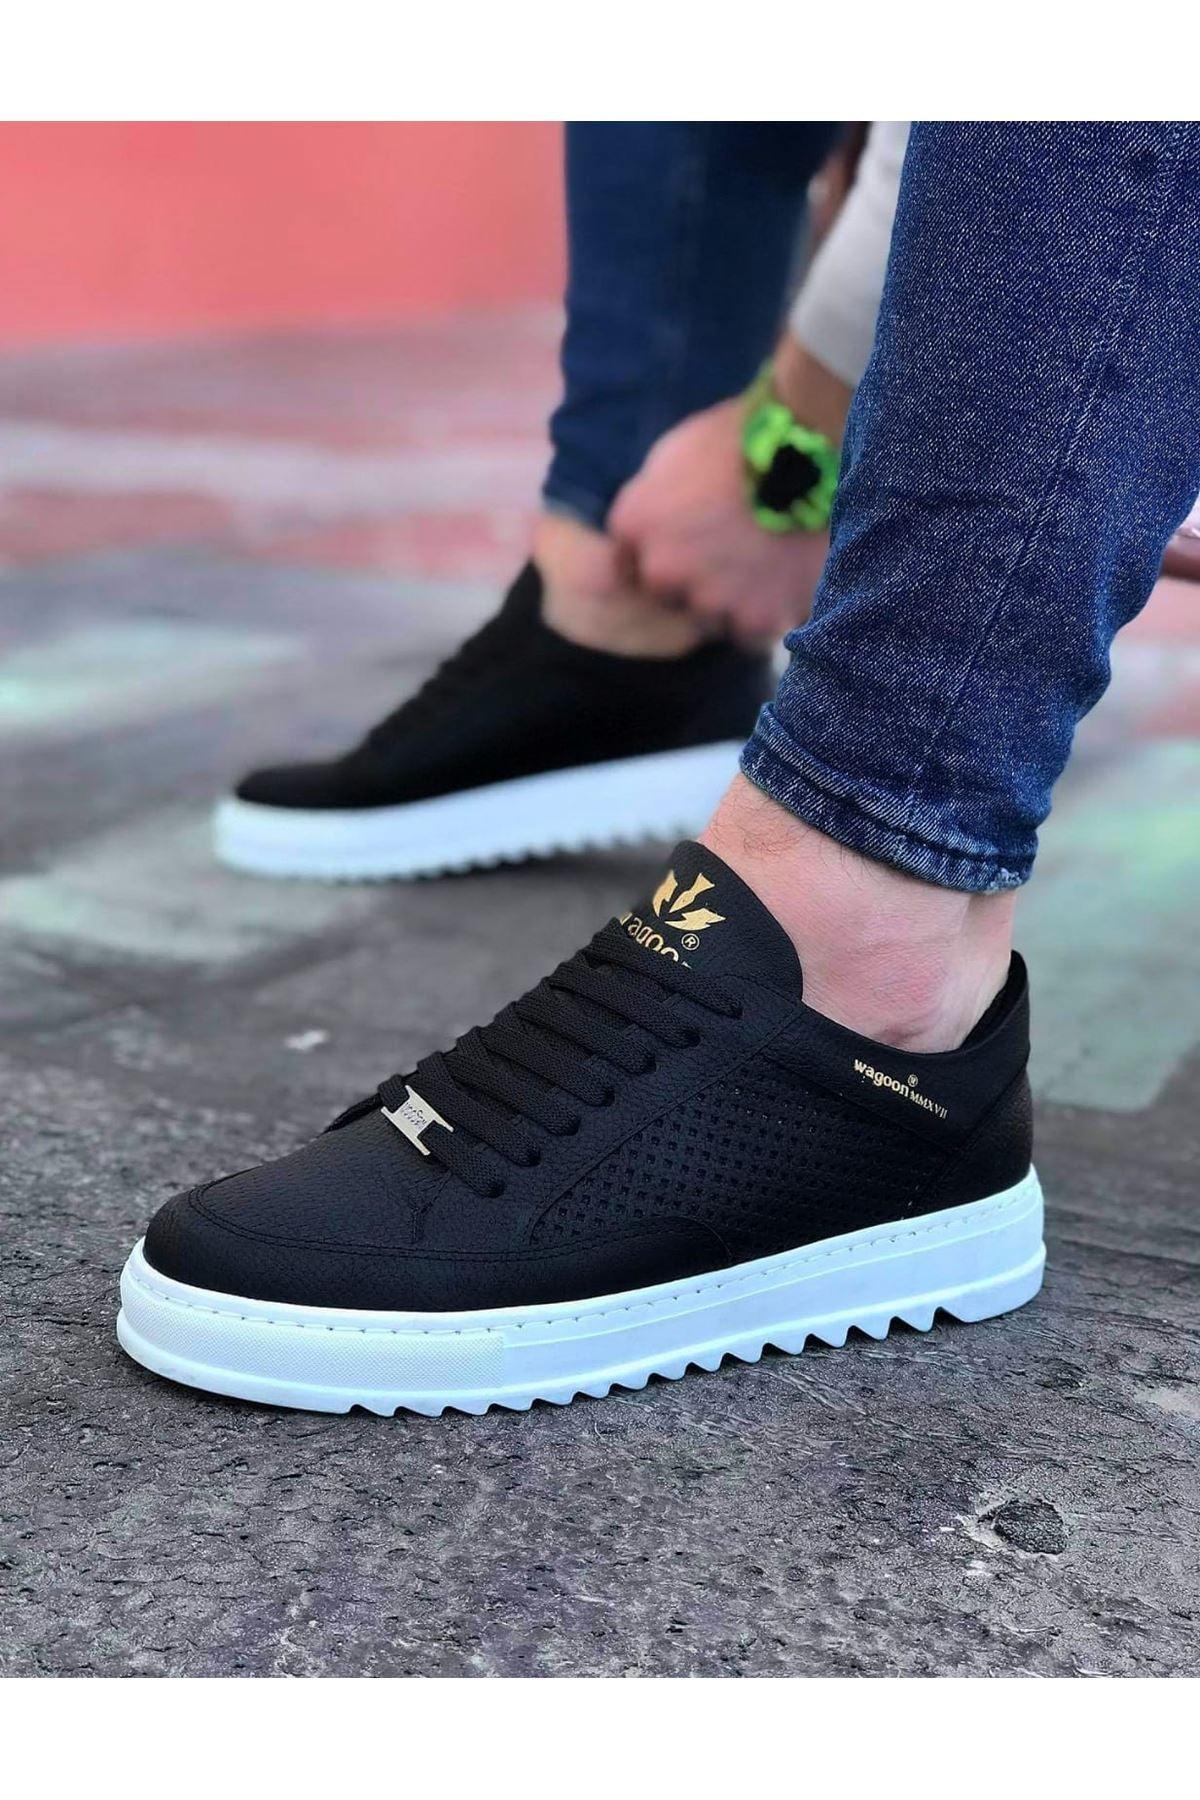 WG505 Black TR Men's Casual Shoes sneakers - STREET MODE ™